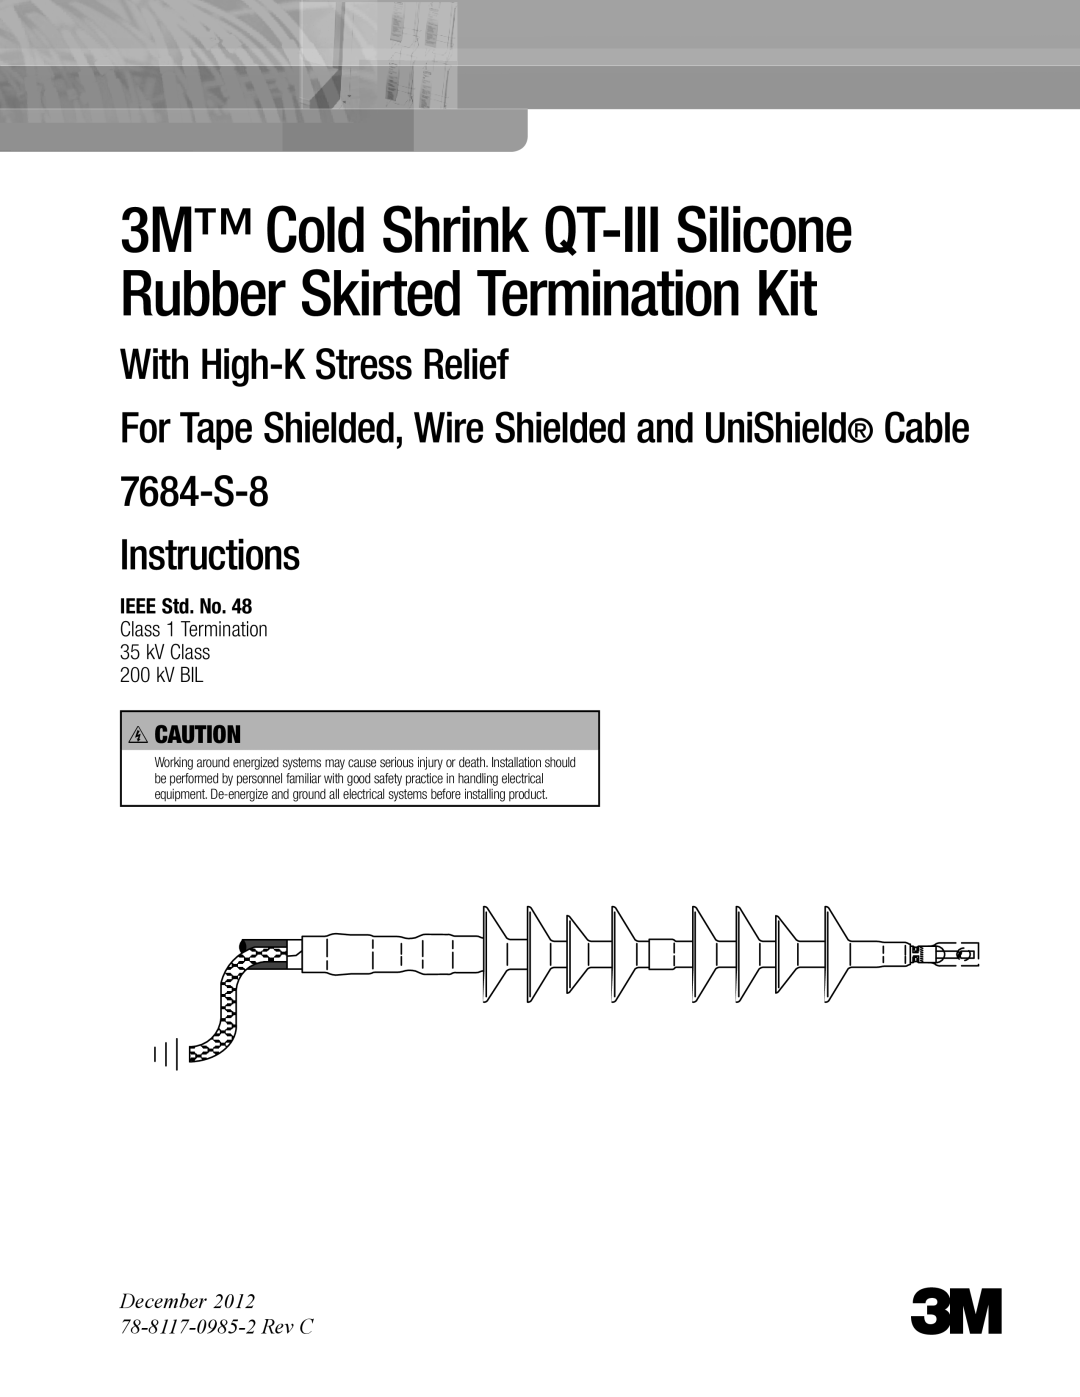 3M manual With High-KStress Relief, 7684-S-8 Instructions, Fcaution, kV BIL, December, 78-8117-0985-2Rev C 